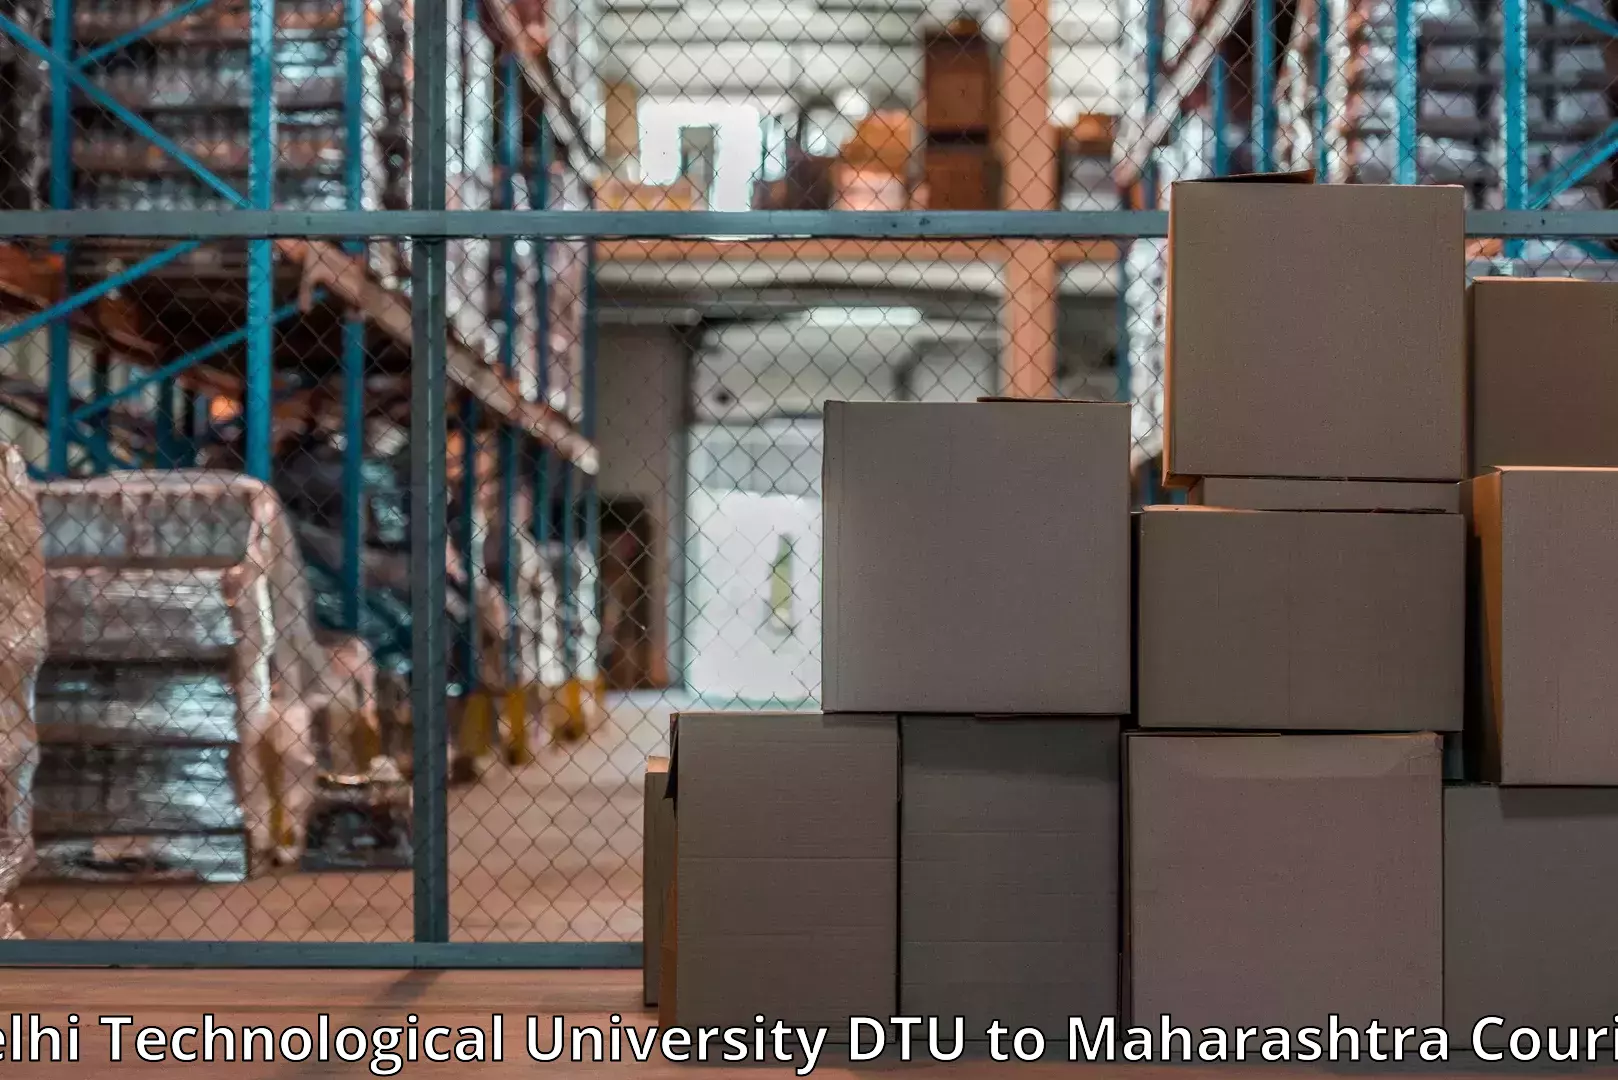 Moving and handling services Delhi Technological University DTU to Jalgaon